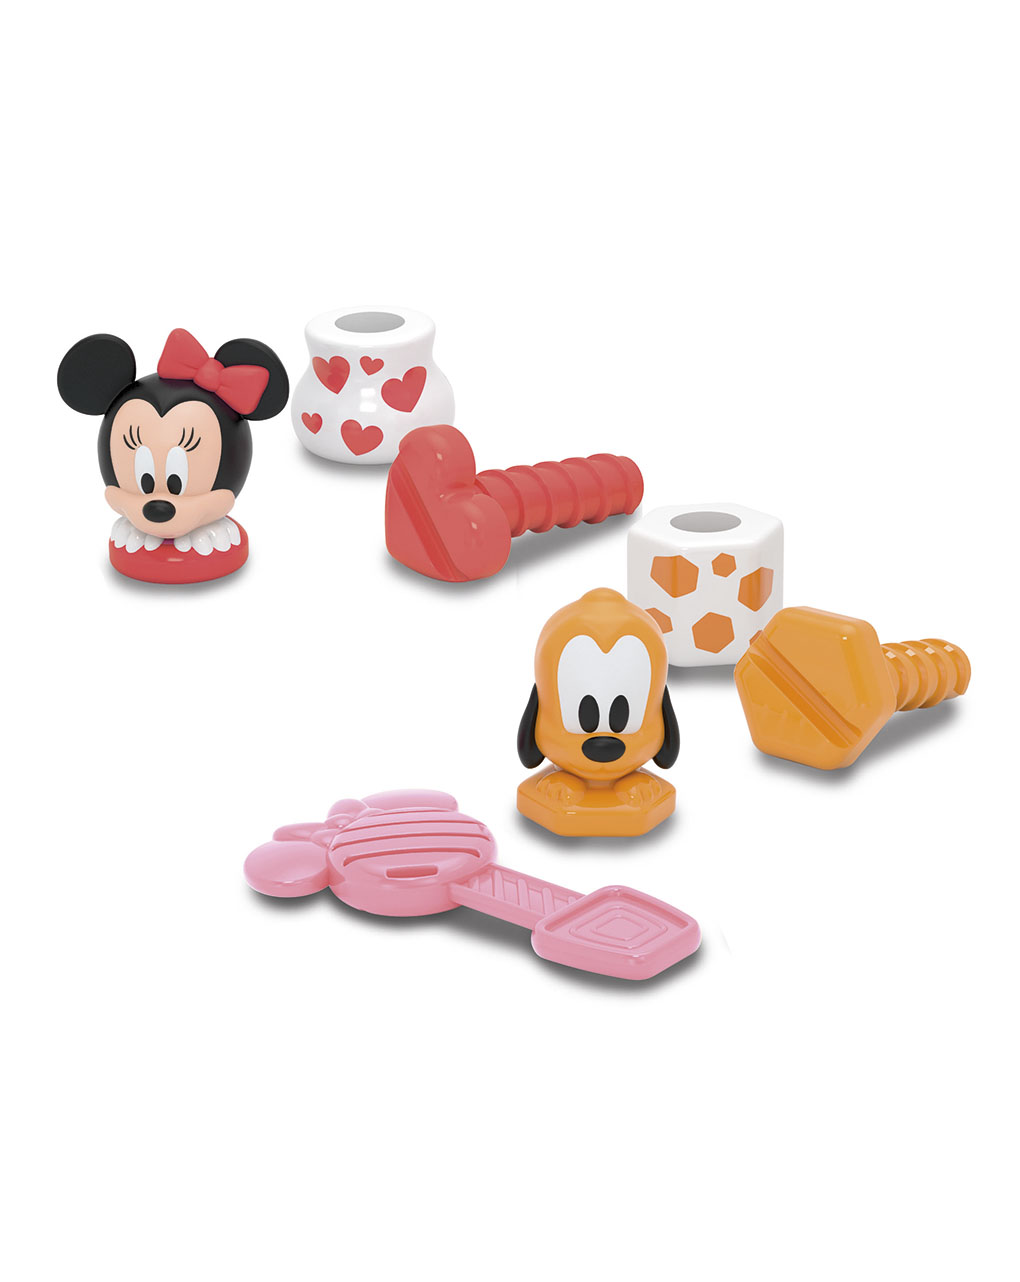 Disney baby minnie costruisci & gioca - baby clementoni - Disney